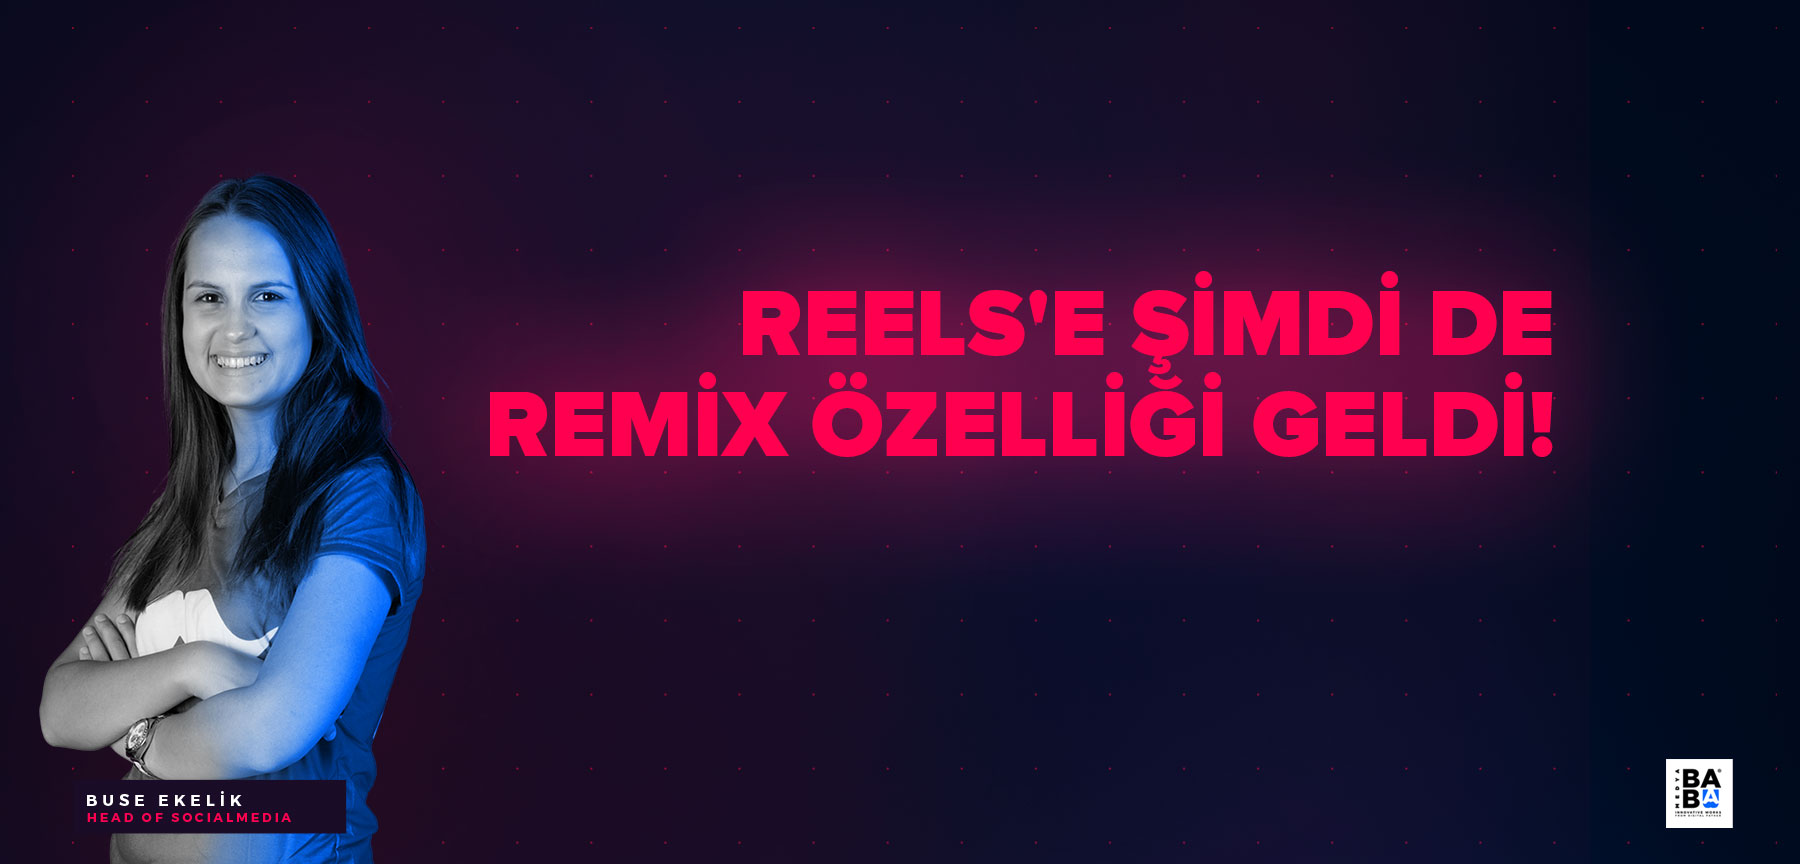 Reels'e şimdi de Remix Özelliği geldi!